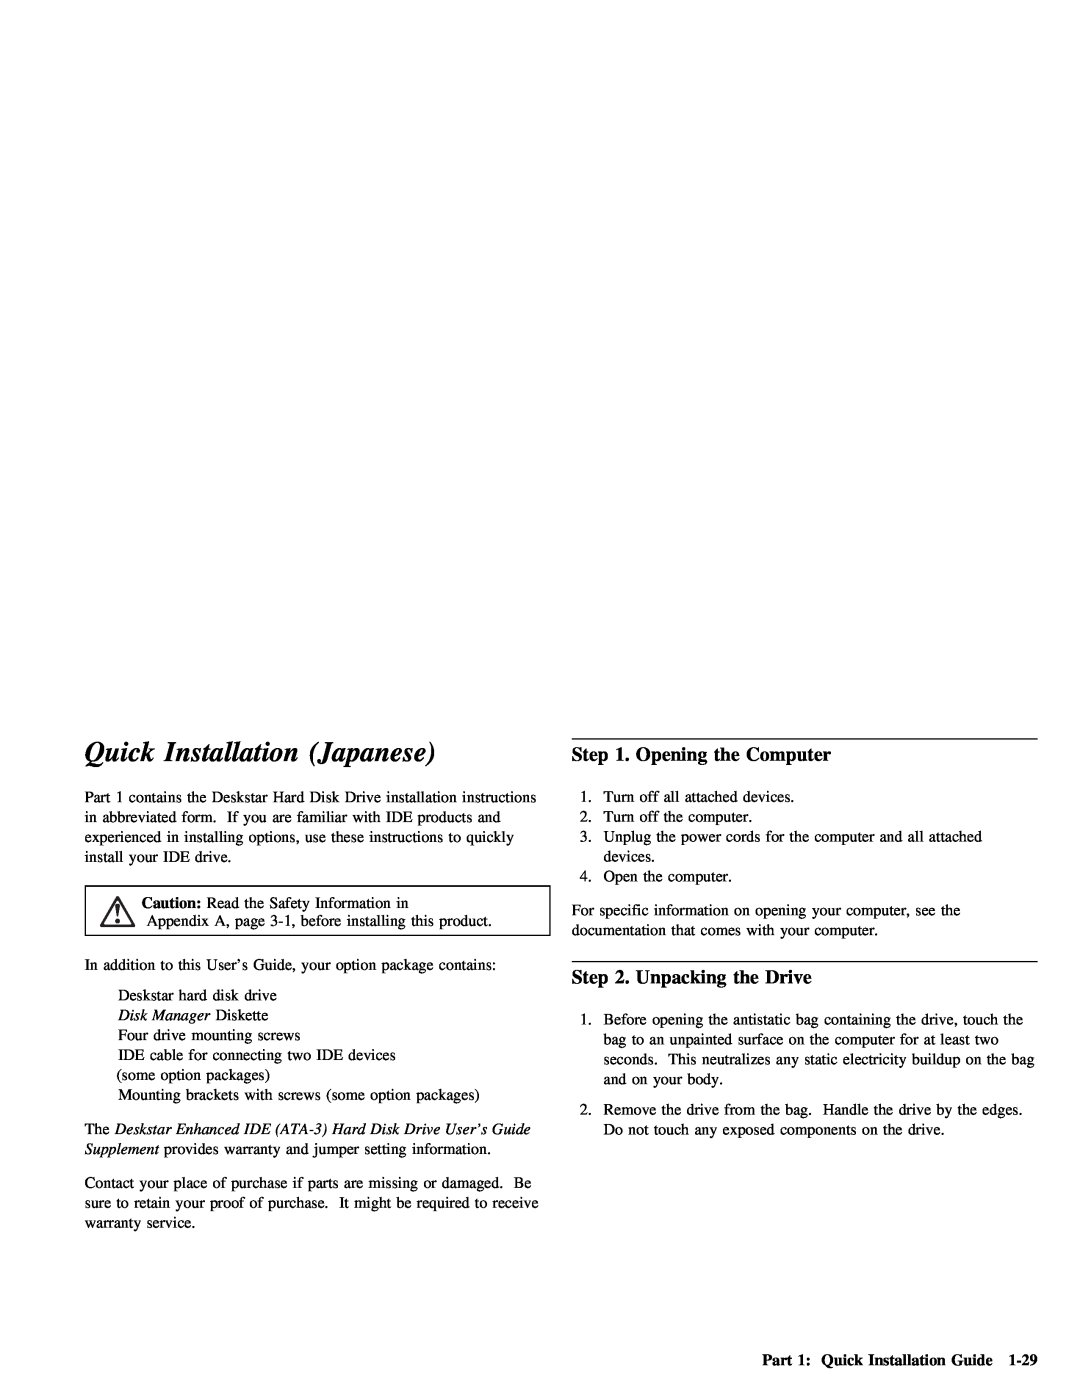 IBM ATA-3 manual Japanese, Drive, Step, Part 1 Quick Installation Guide 